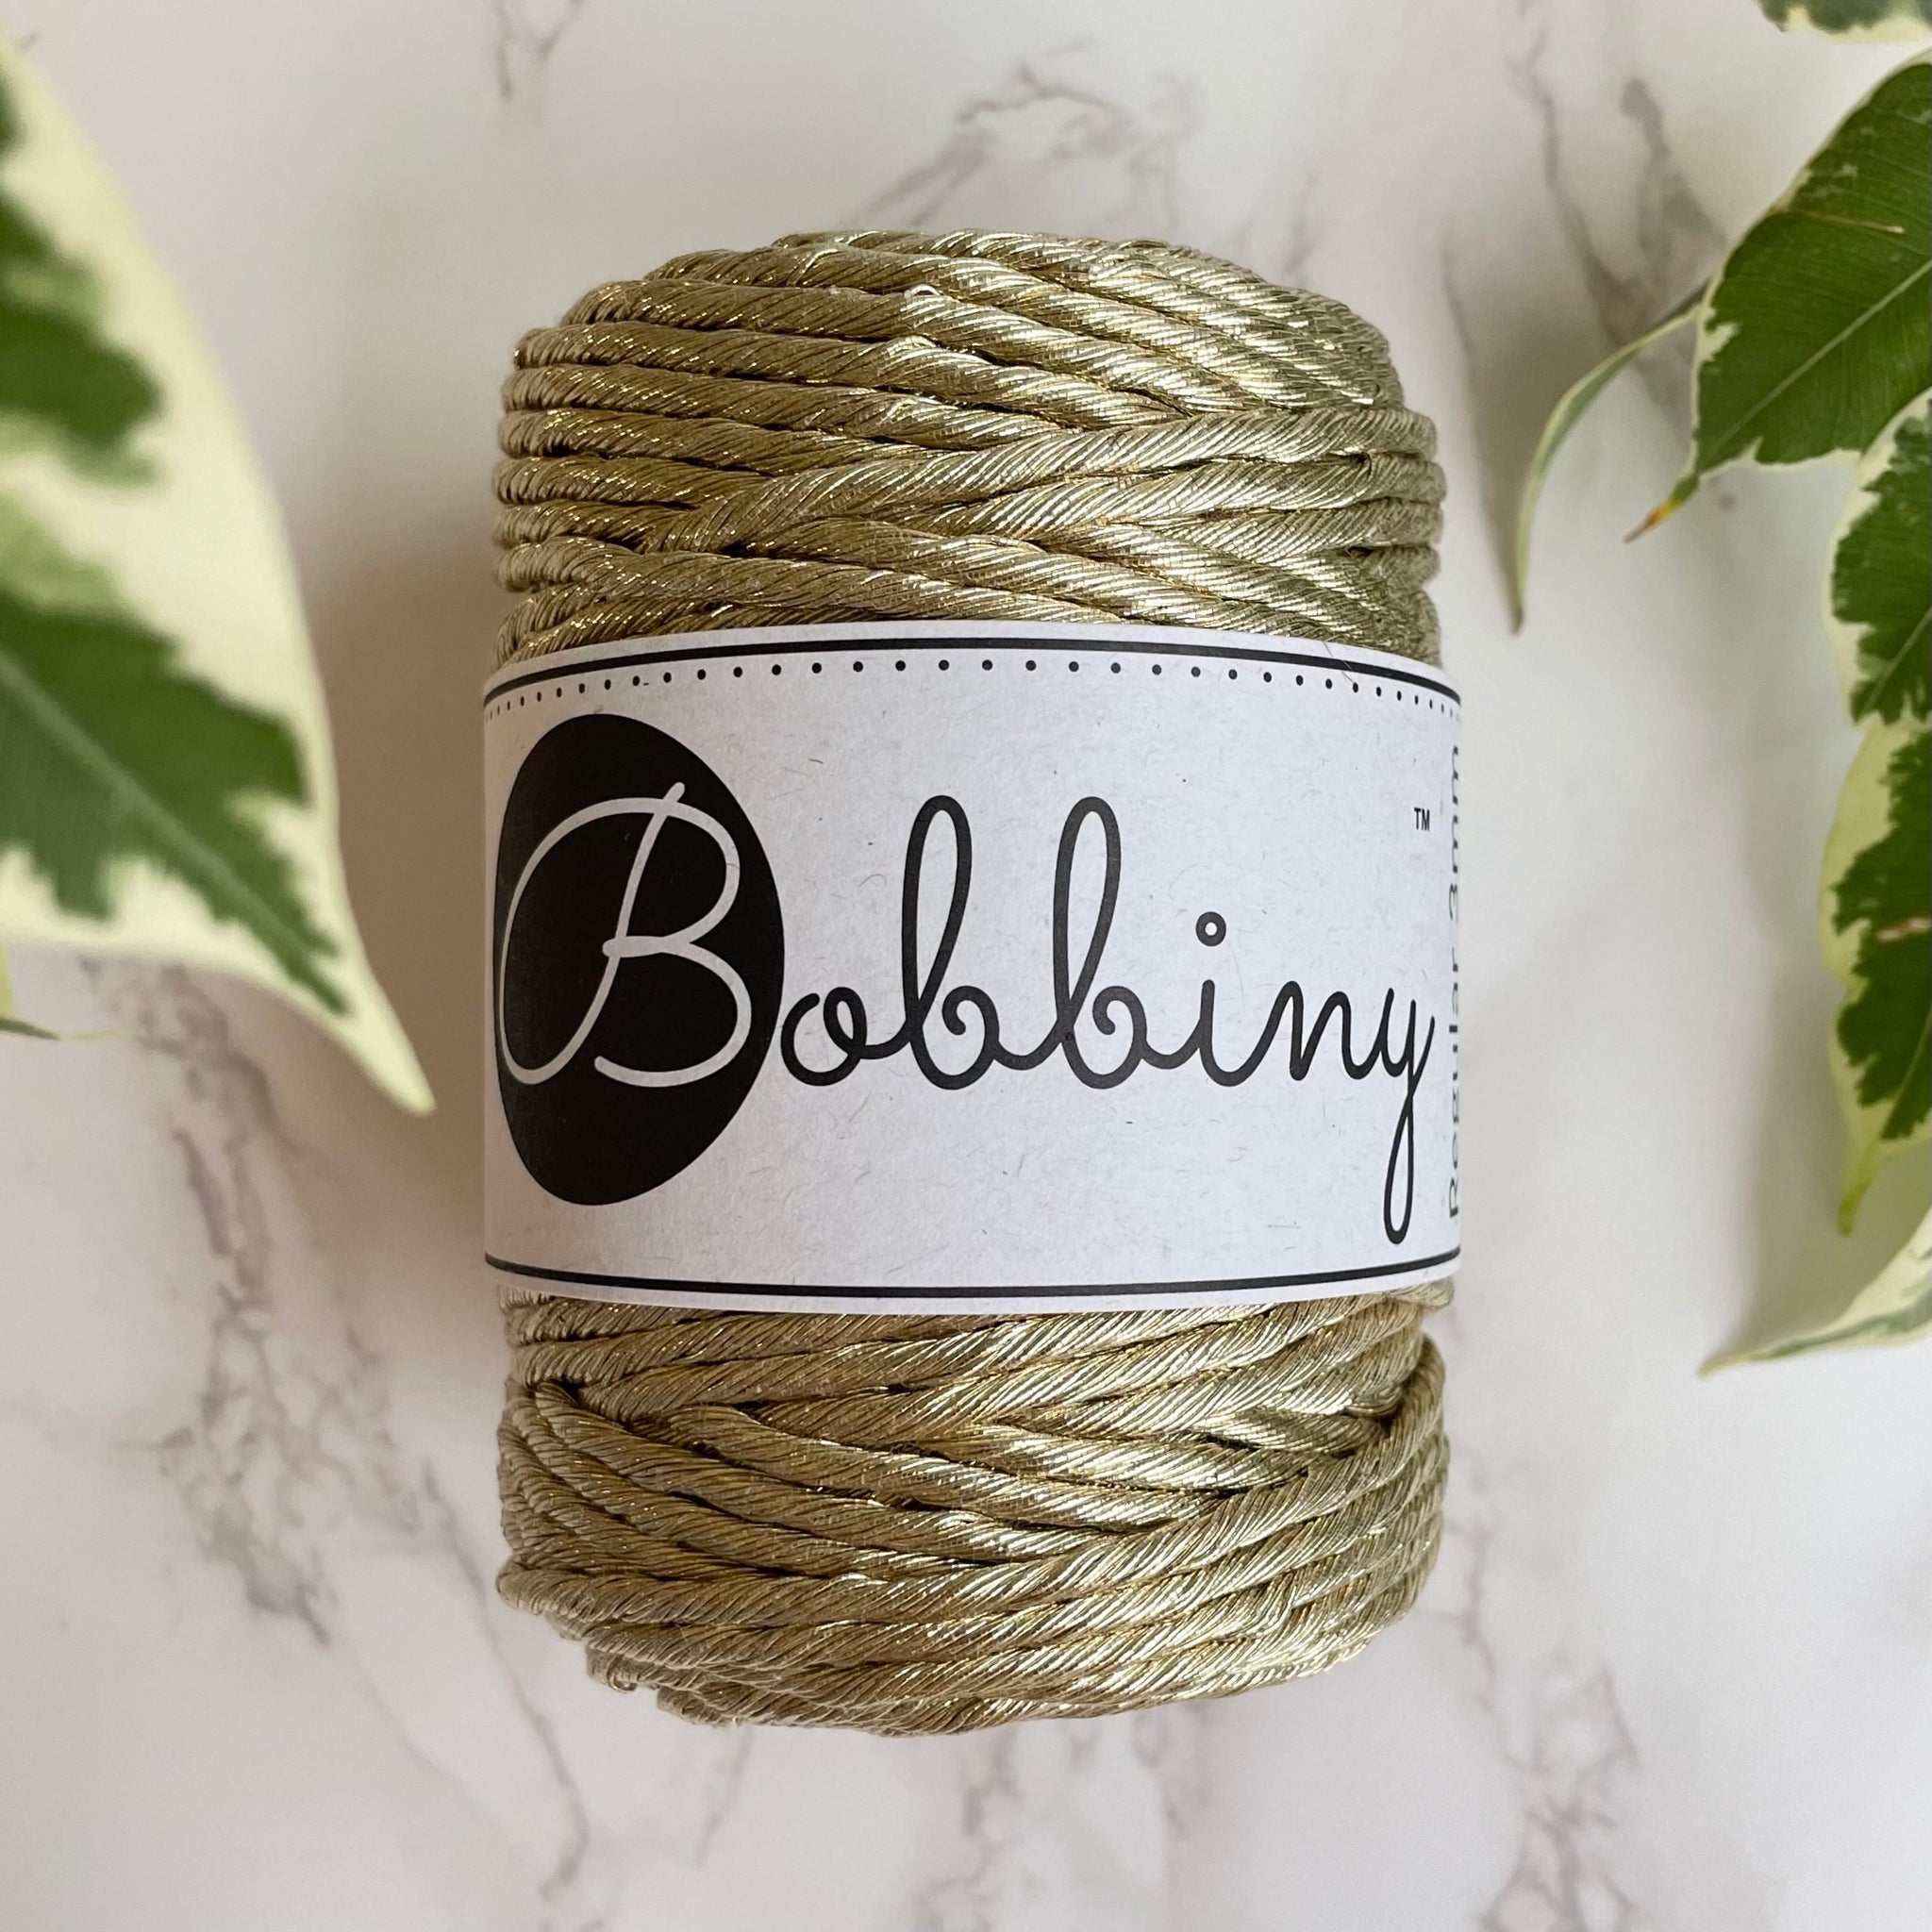 Bobbiny 3mm 'Metallic Gold' Cotton String - 50m